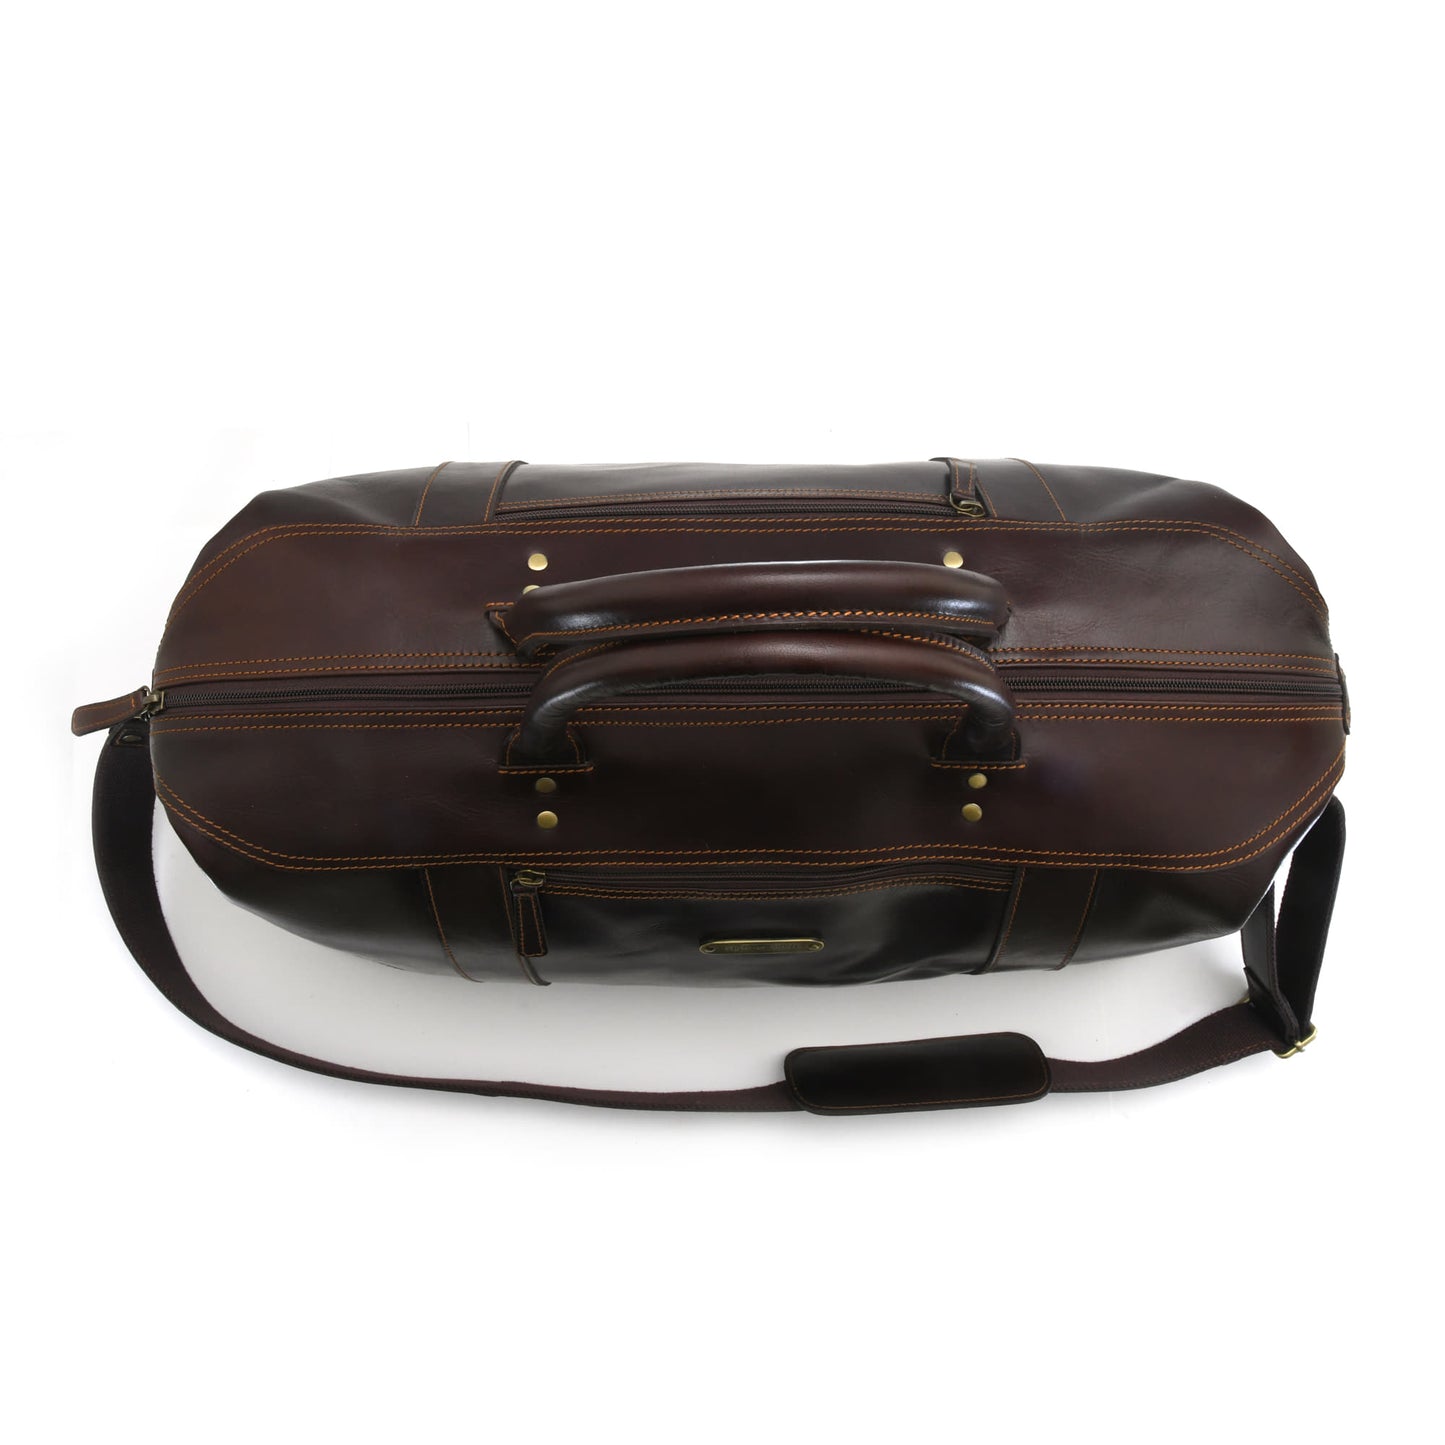 Style n Craft 392100 Large Duffle Bag in Full Grain Dark Brown Leather - Top View